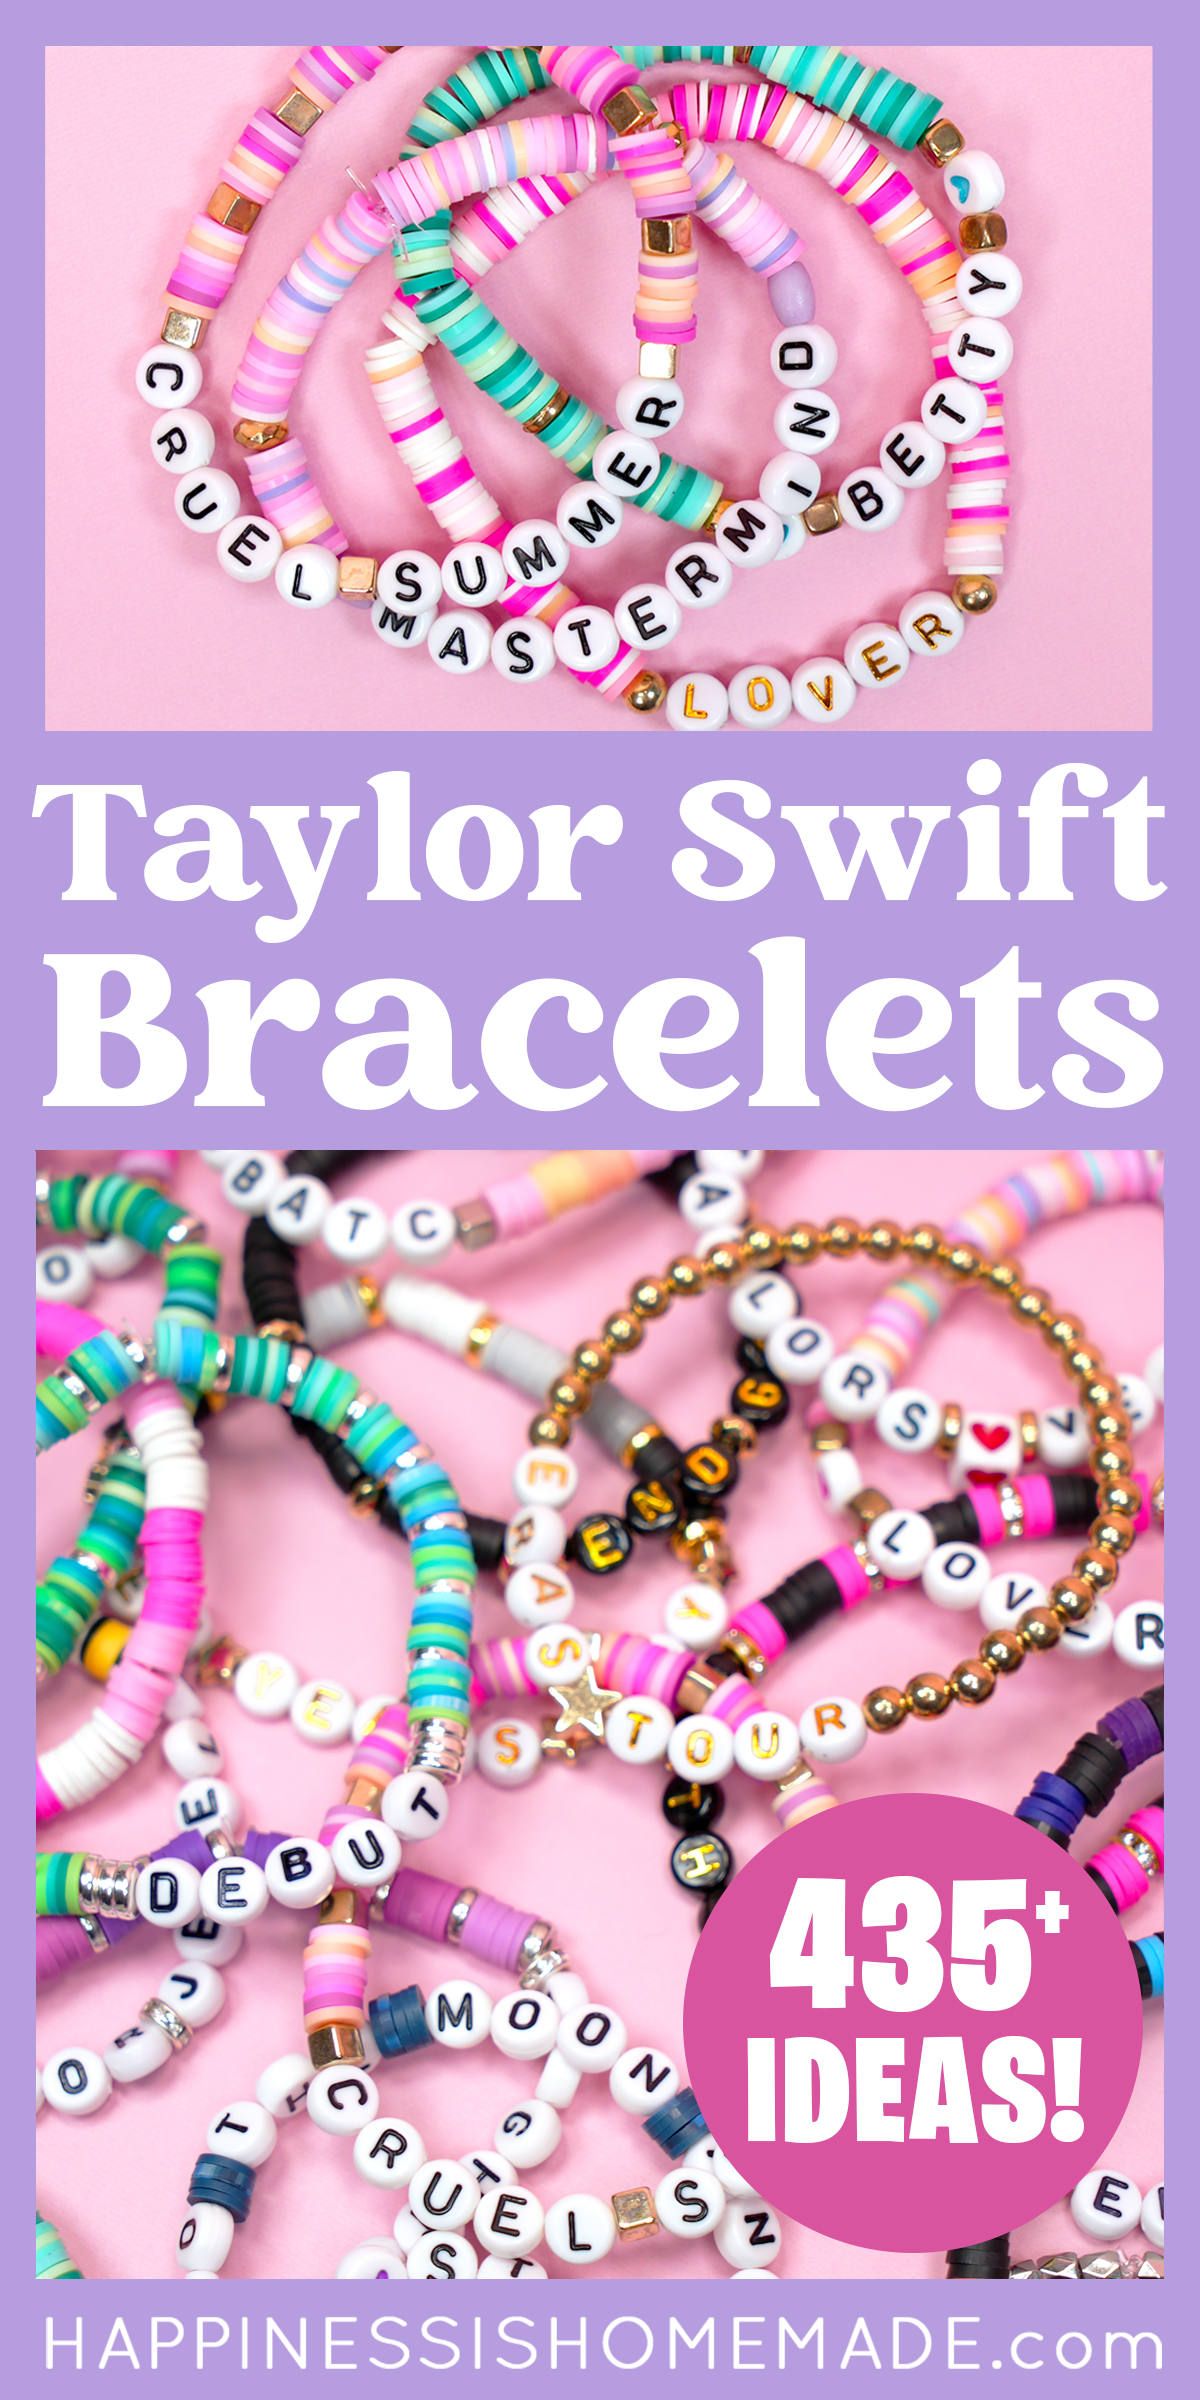 Friendship Bracelets - How Many Is Too Many? : r/TaylorSwift